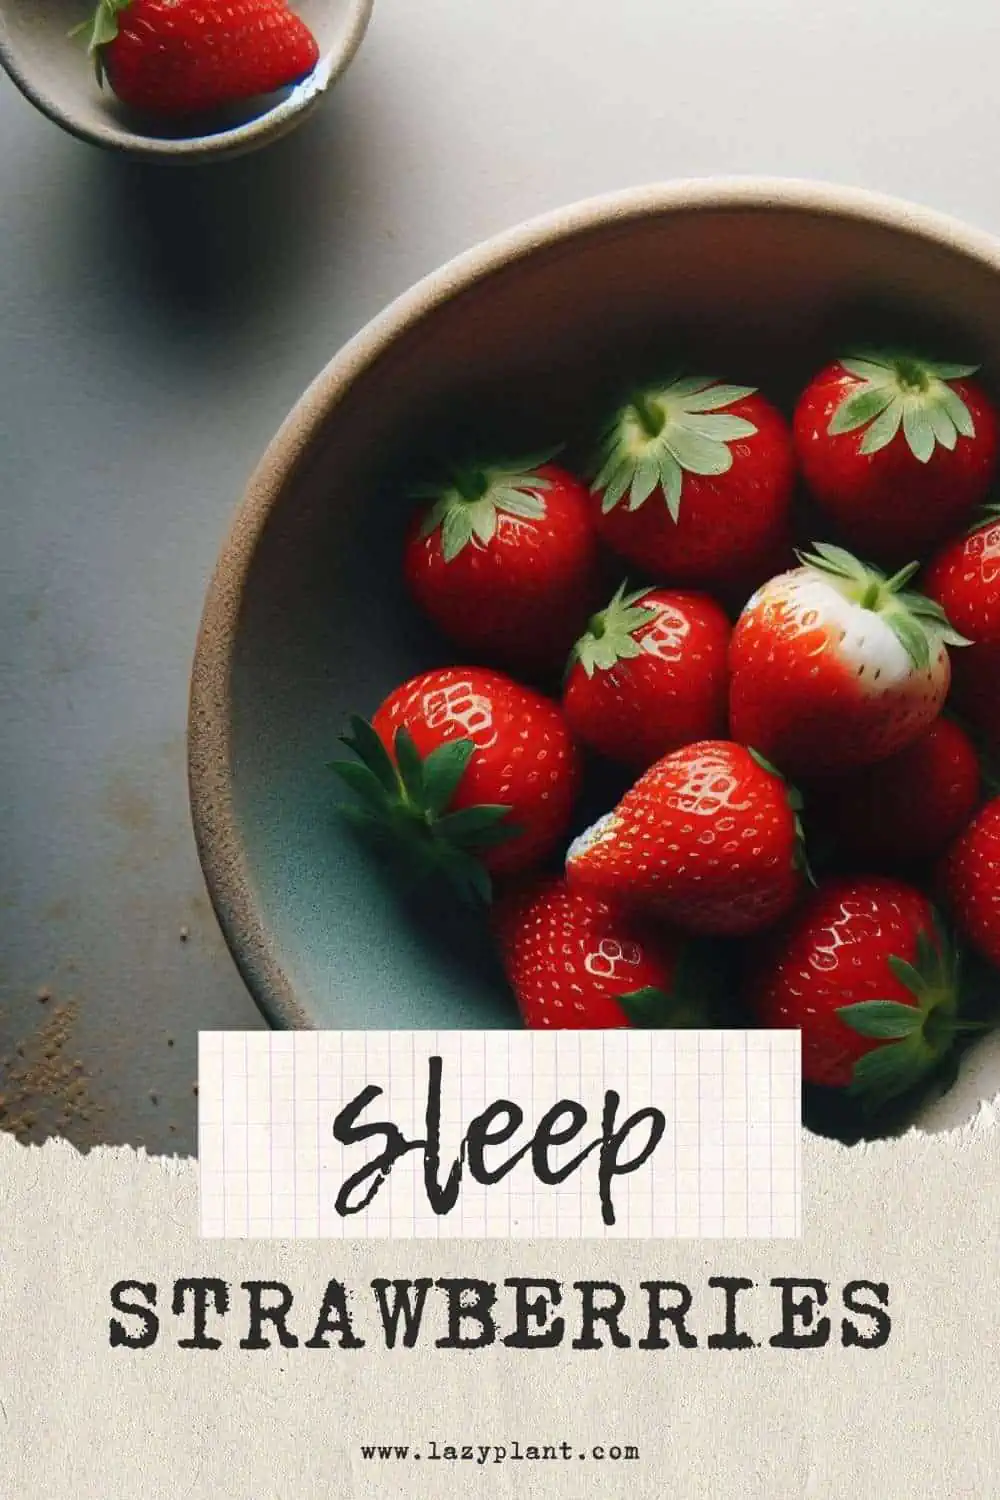 Strawberries support Sleep